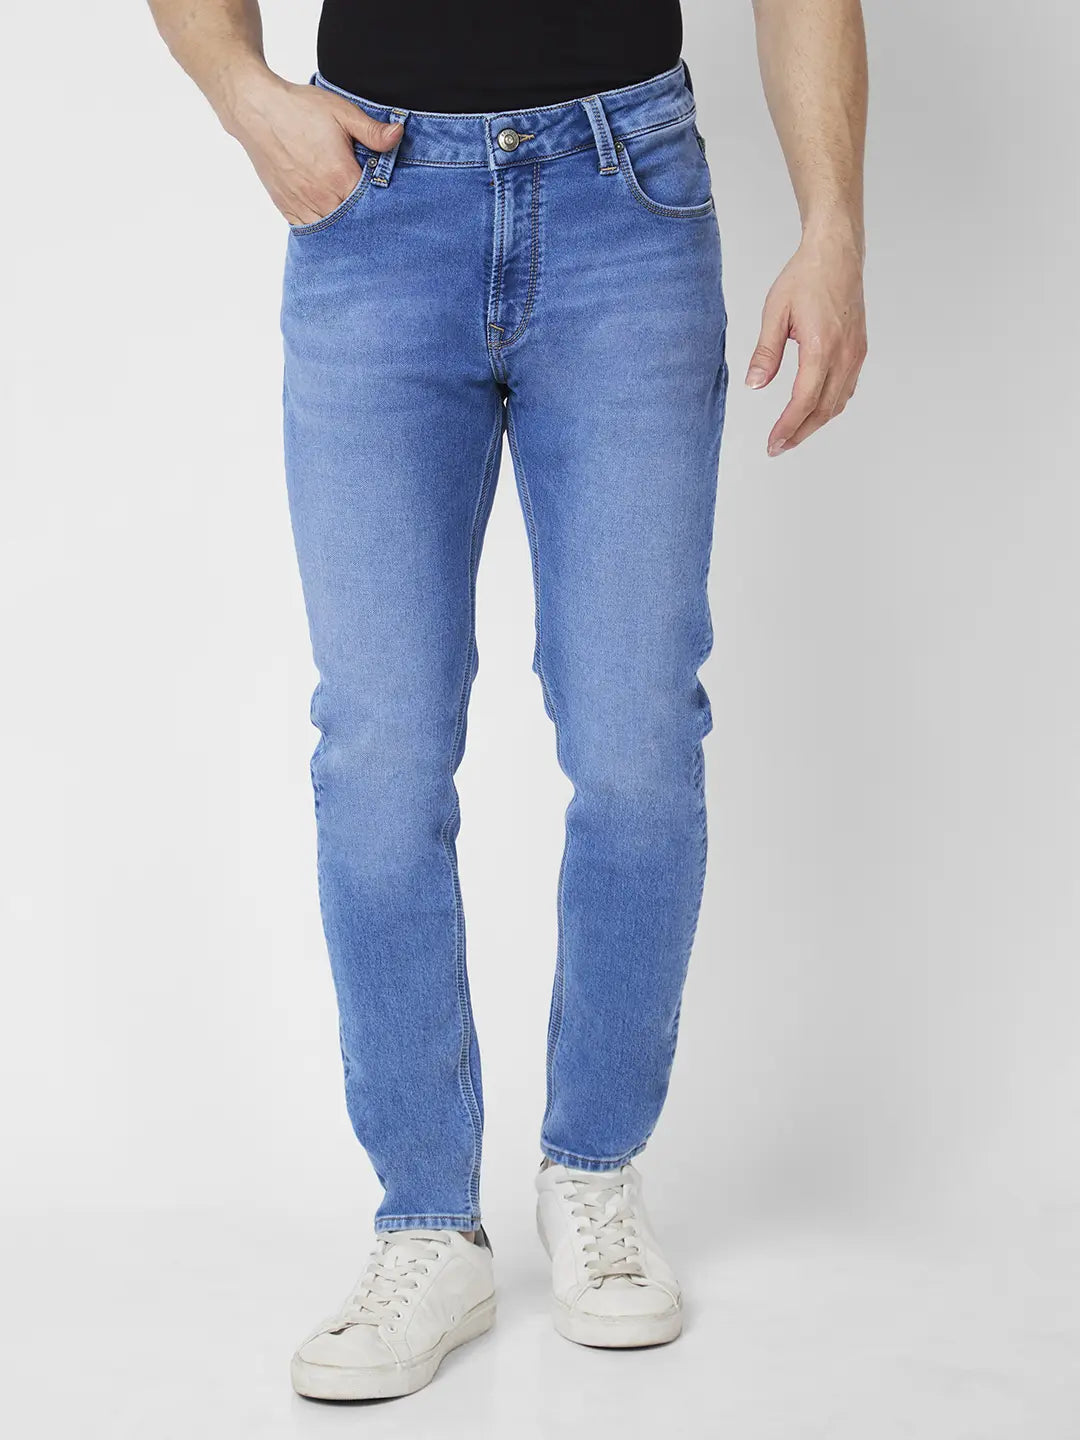 Original Denim Jeans For Men at Rs.0/Piece in rajkot offer by Krossworld